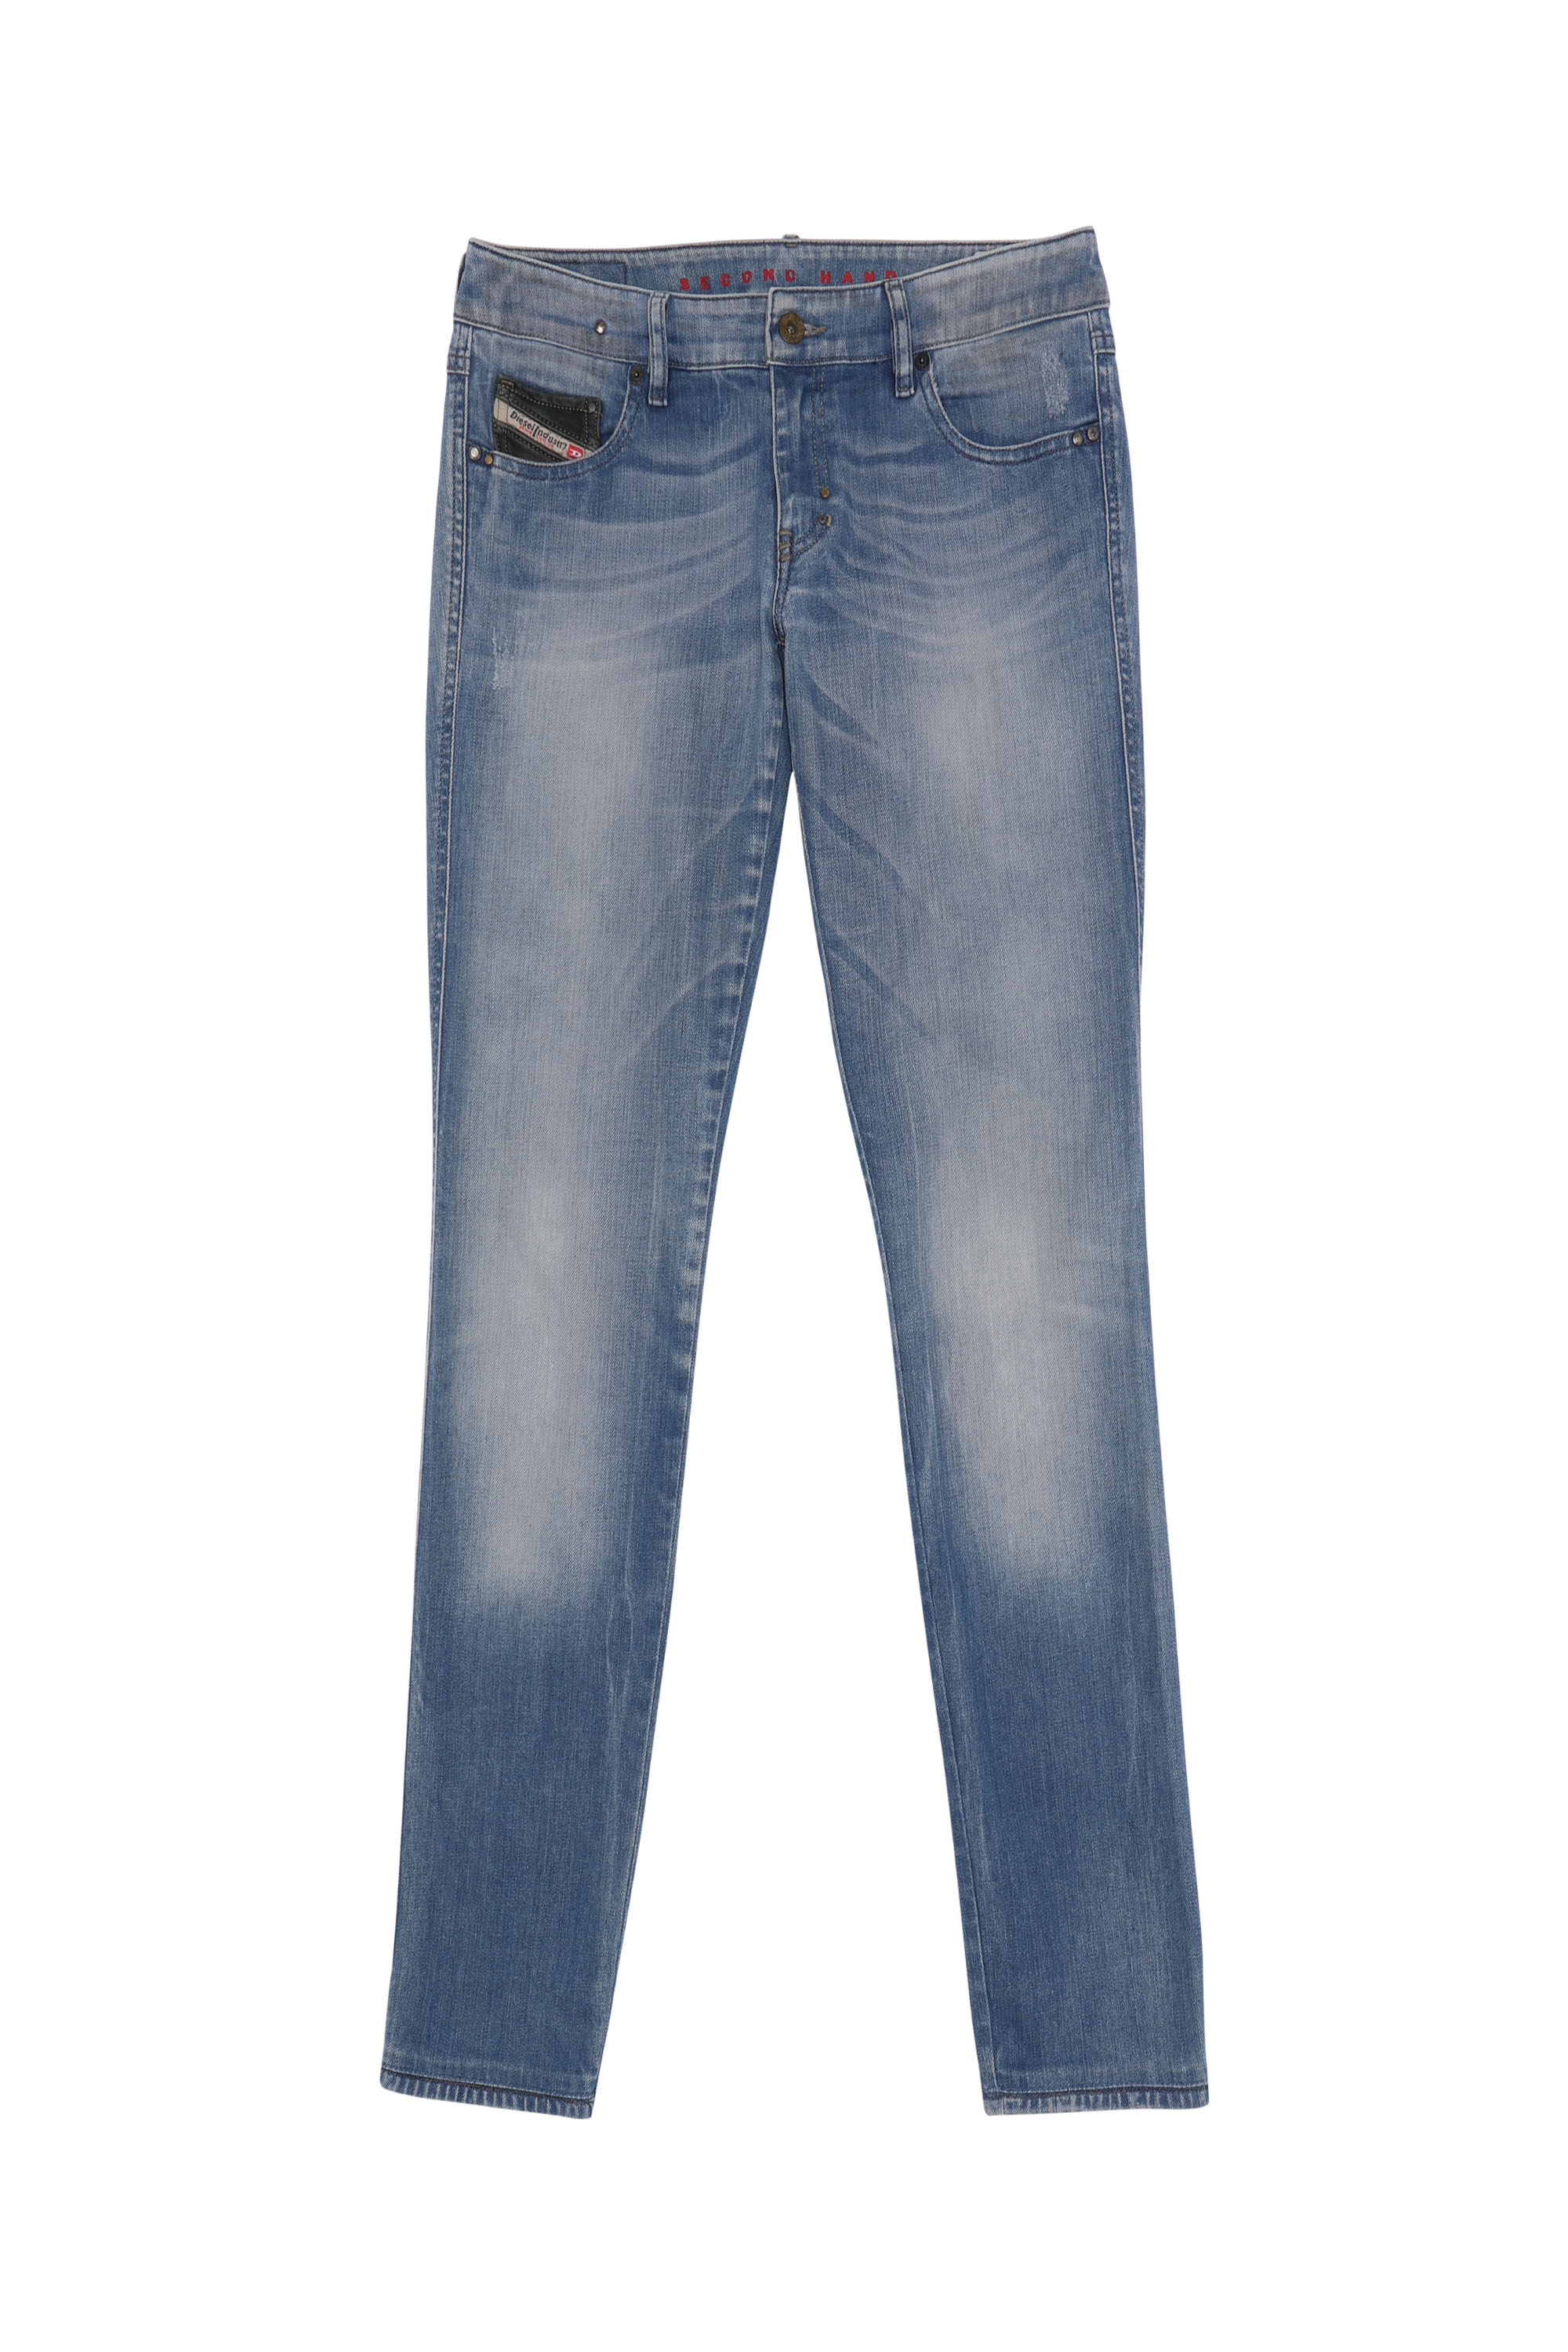 LHELA, Medium blue - Jeans